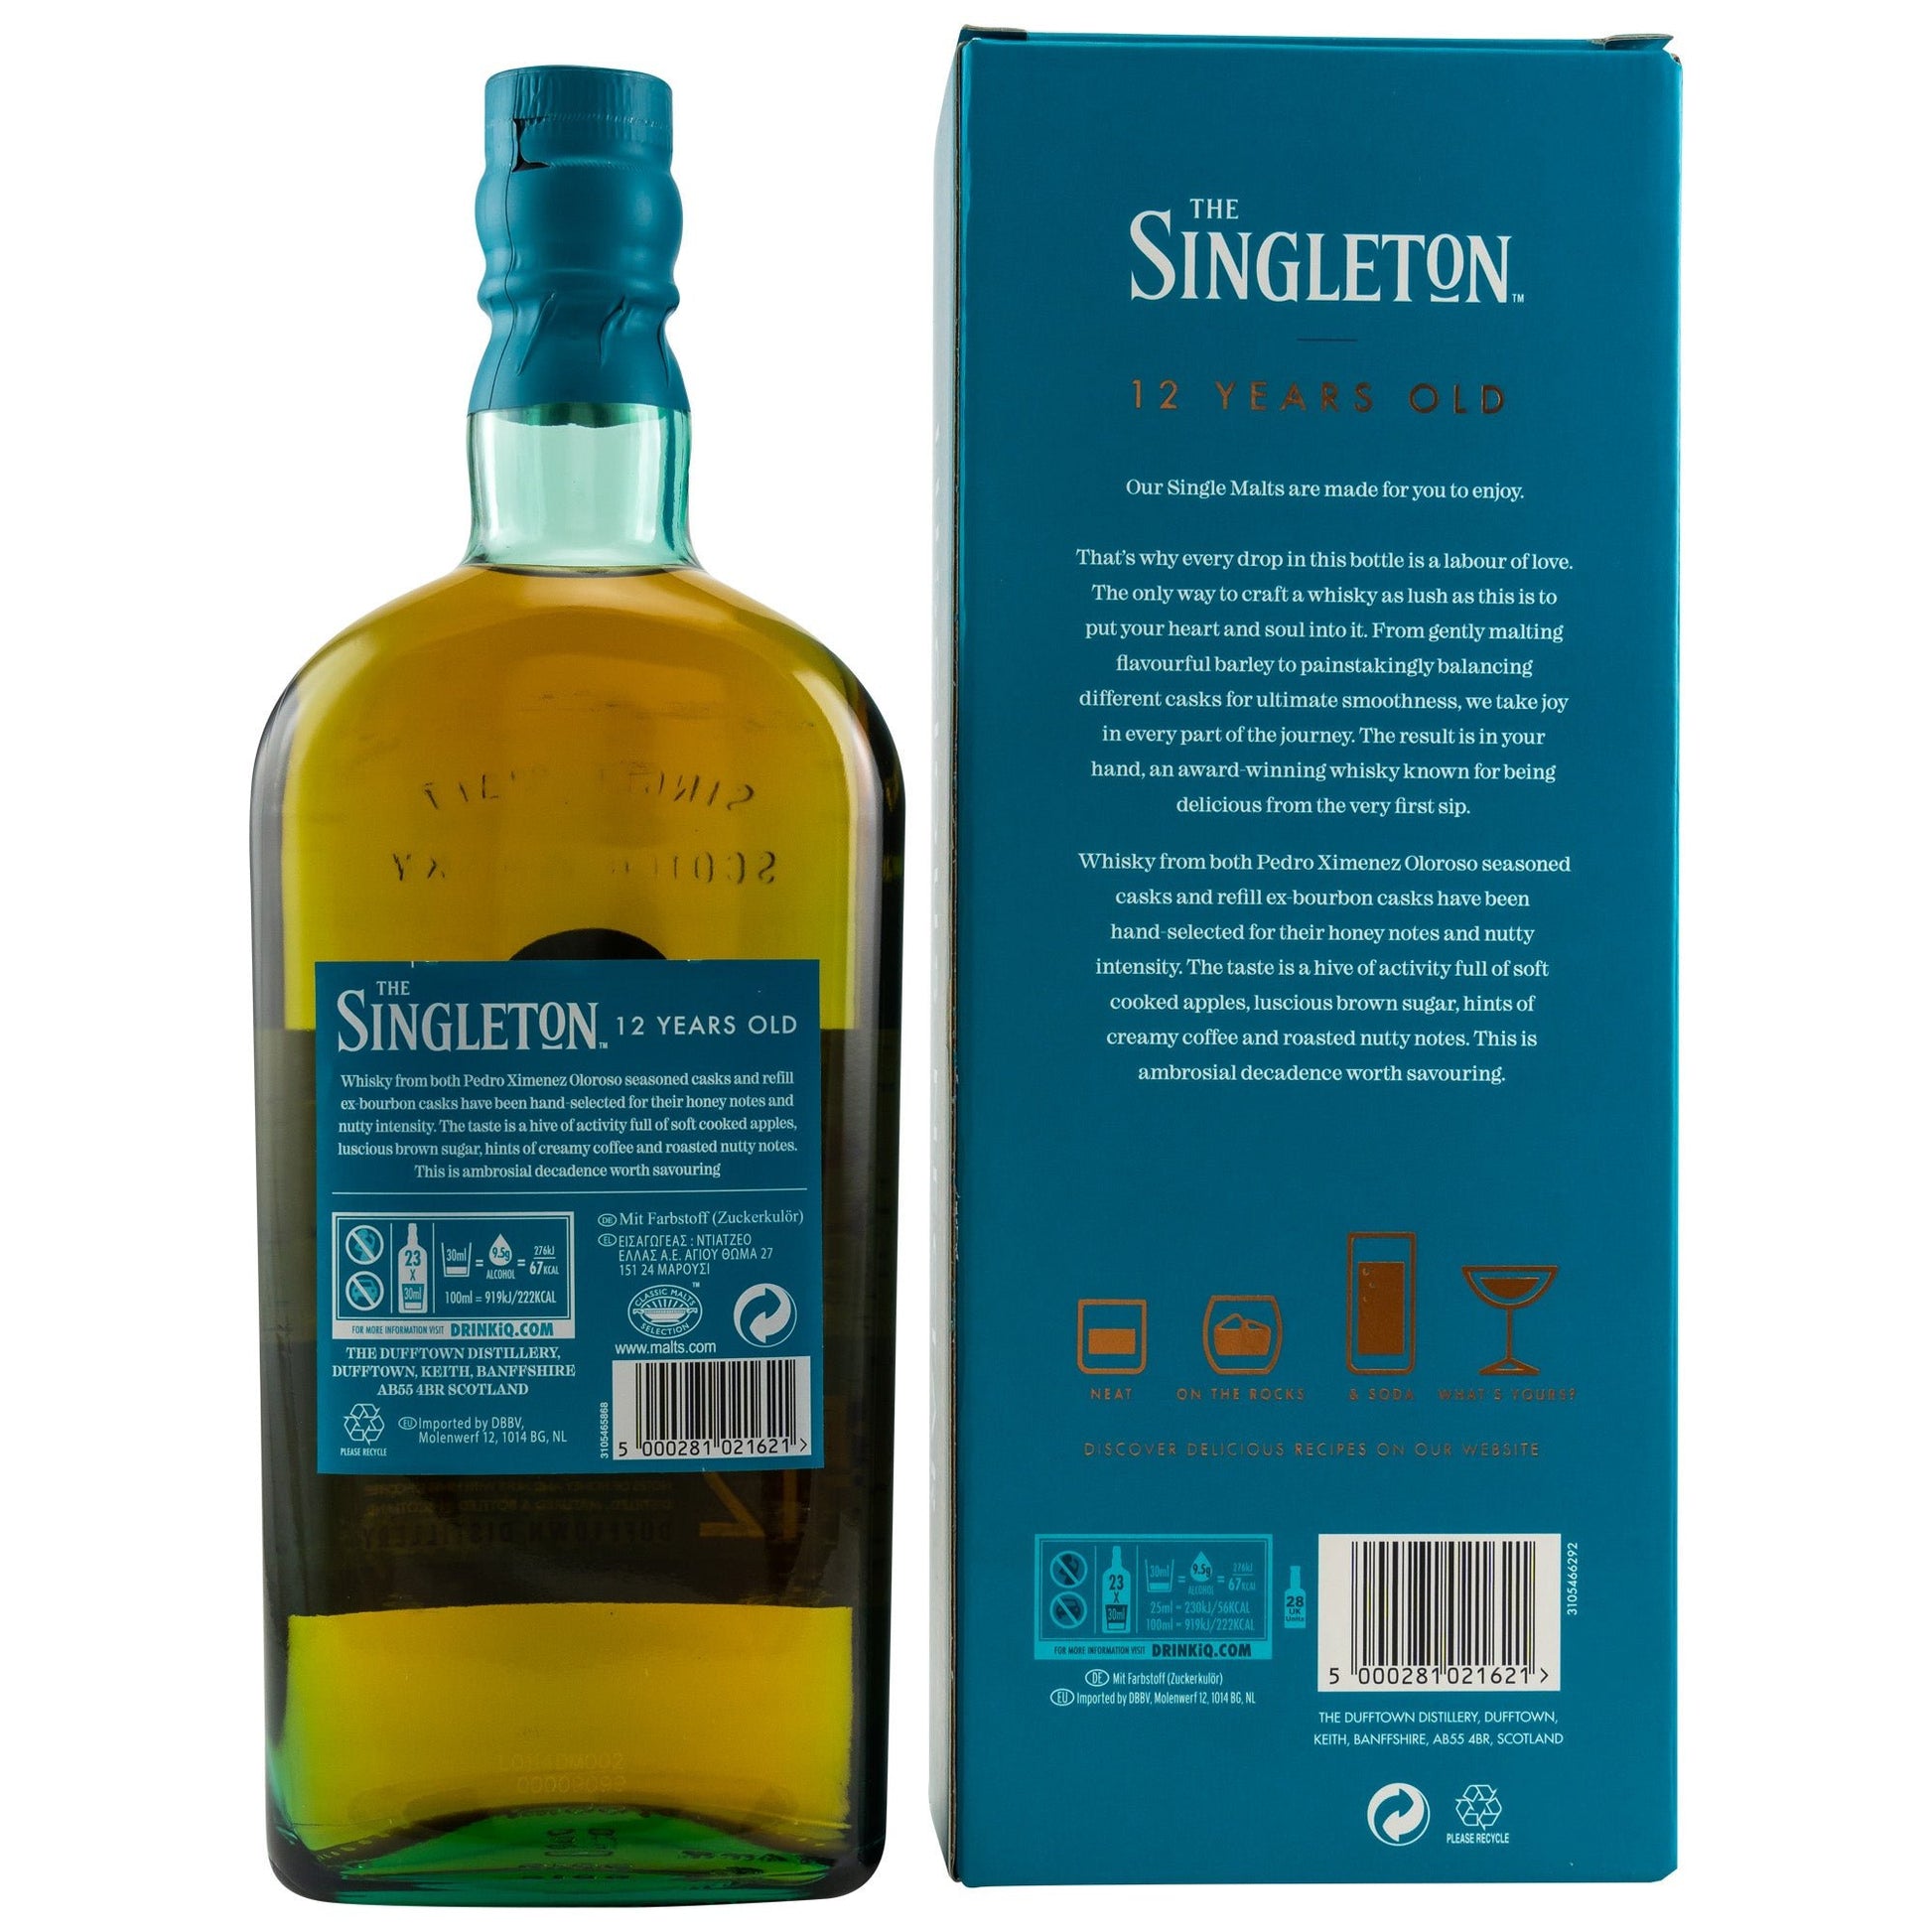 The Singleton of Dufftown | 12 Jahre | Luscious Nectar | 0,7l | 40%GET A BOTTLE